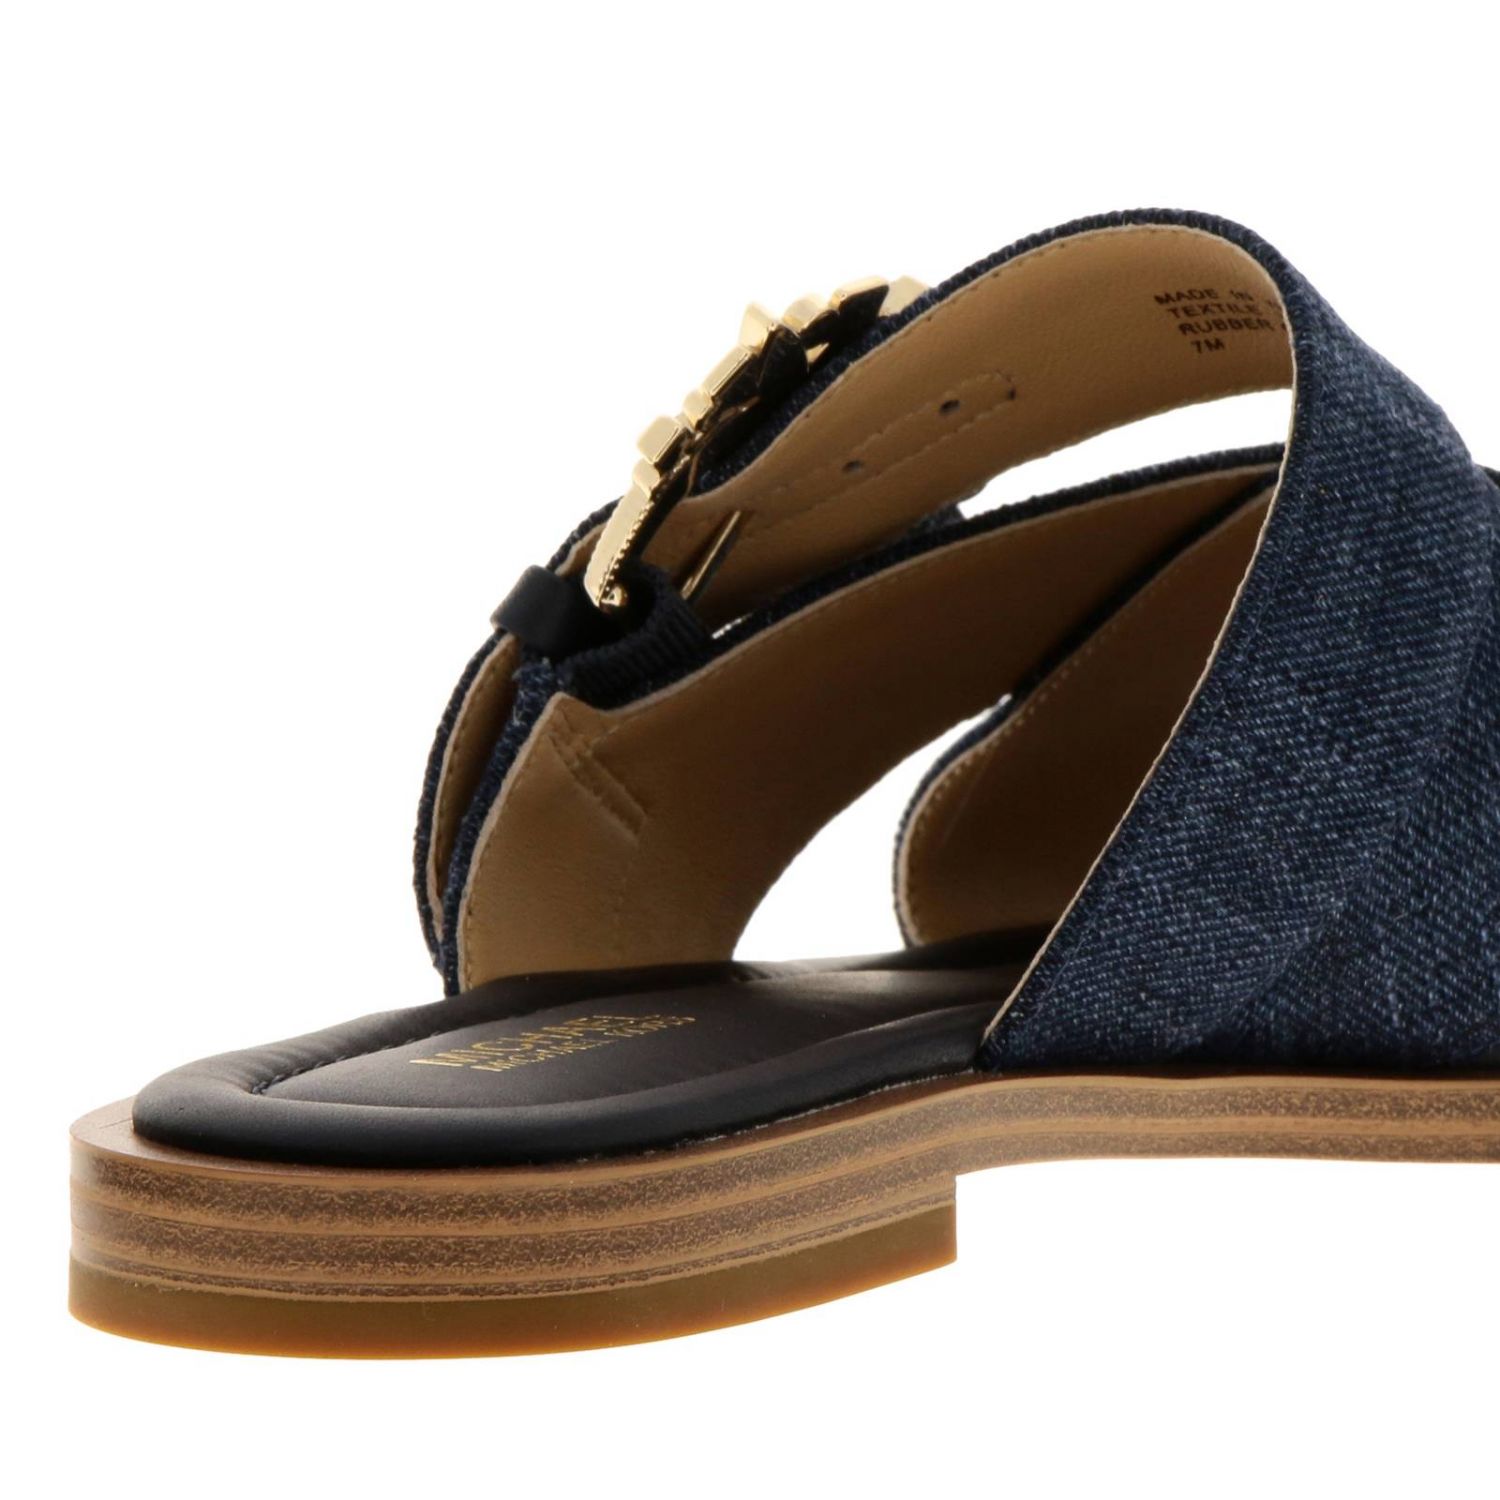 Michael Kors Outlet: flat sandals for women - Blue | Michael Kors flat ...